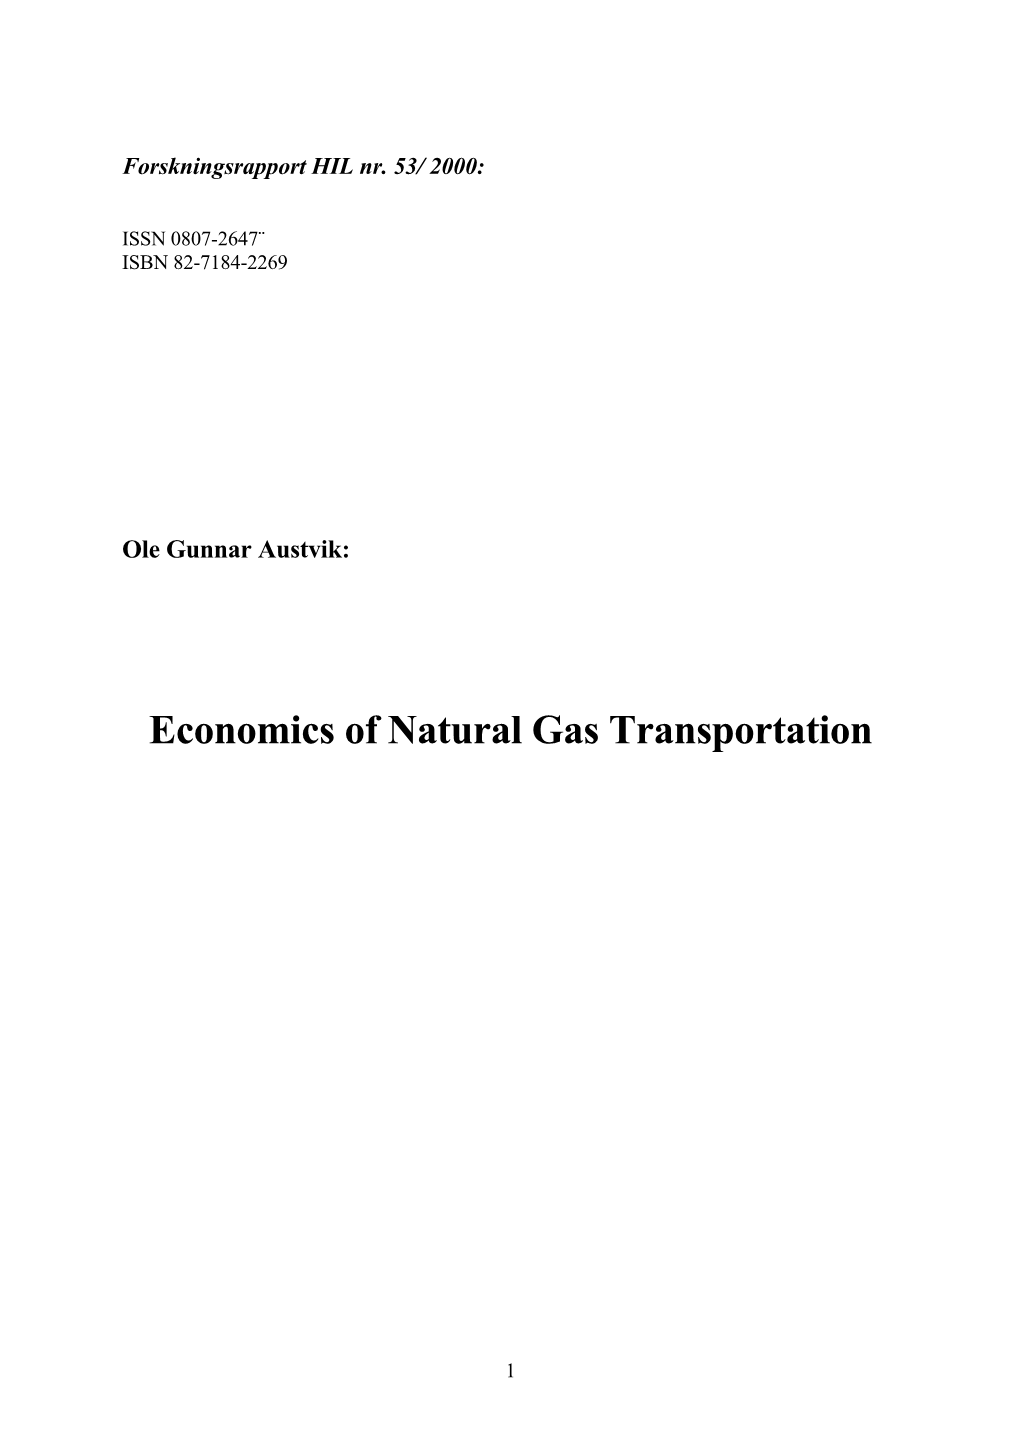 Economics of Natural Gas Transportation